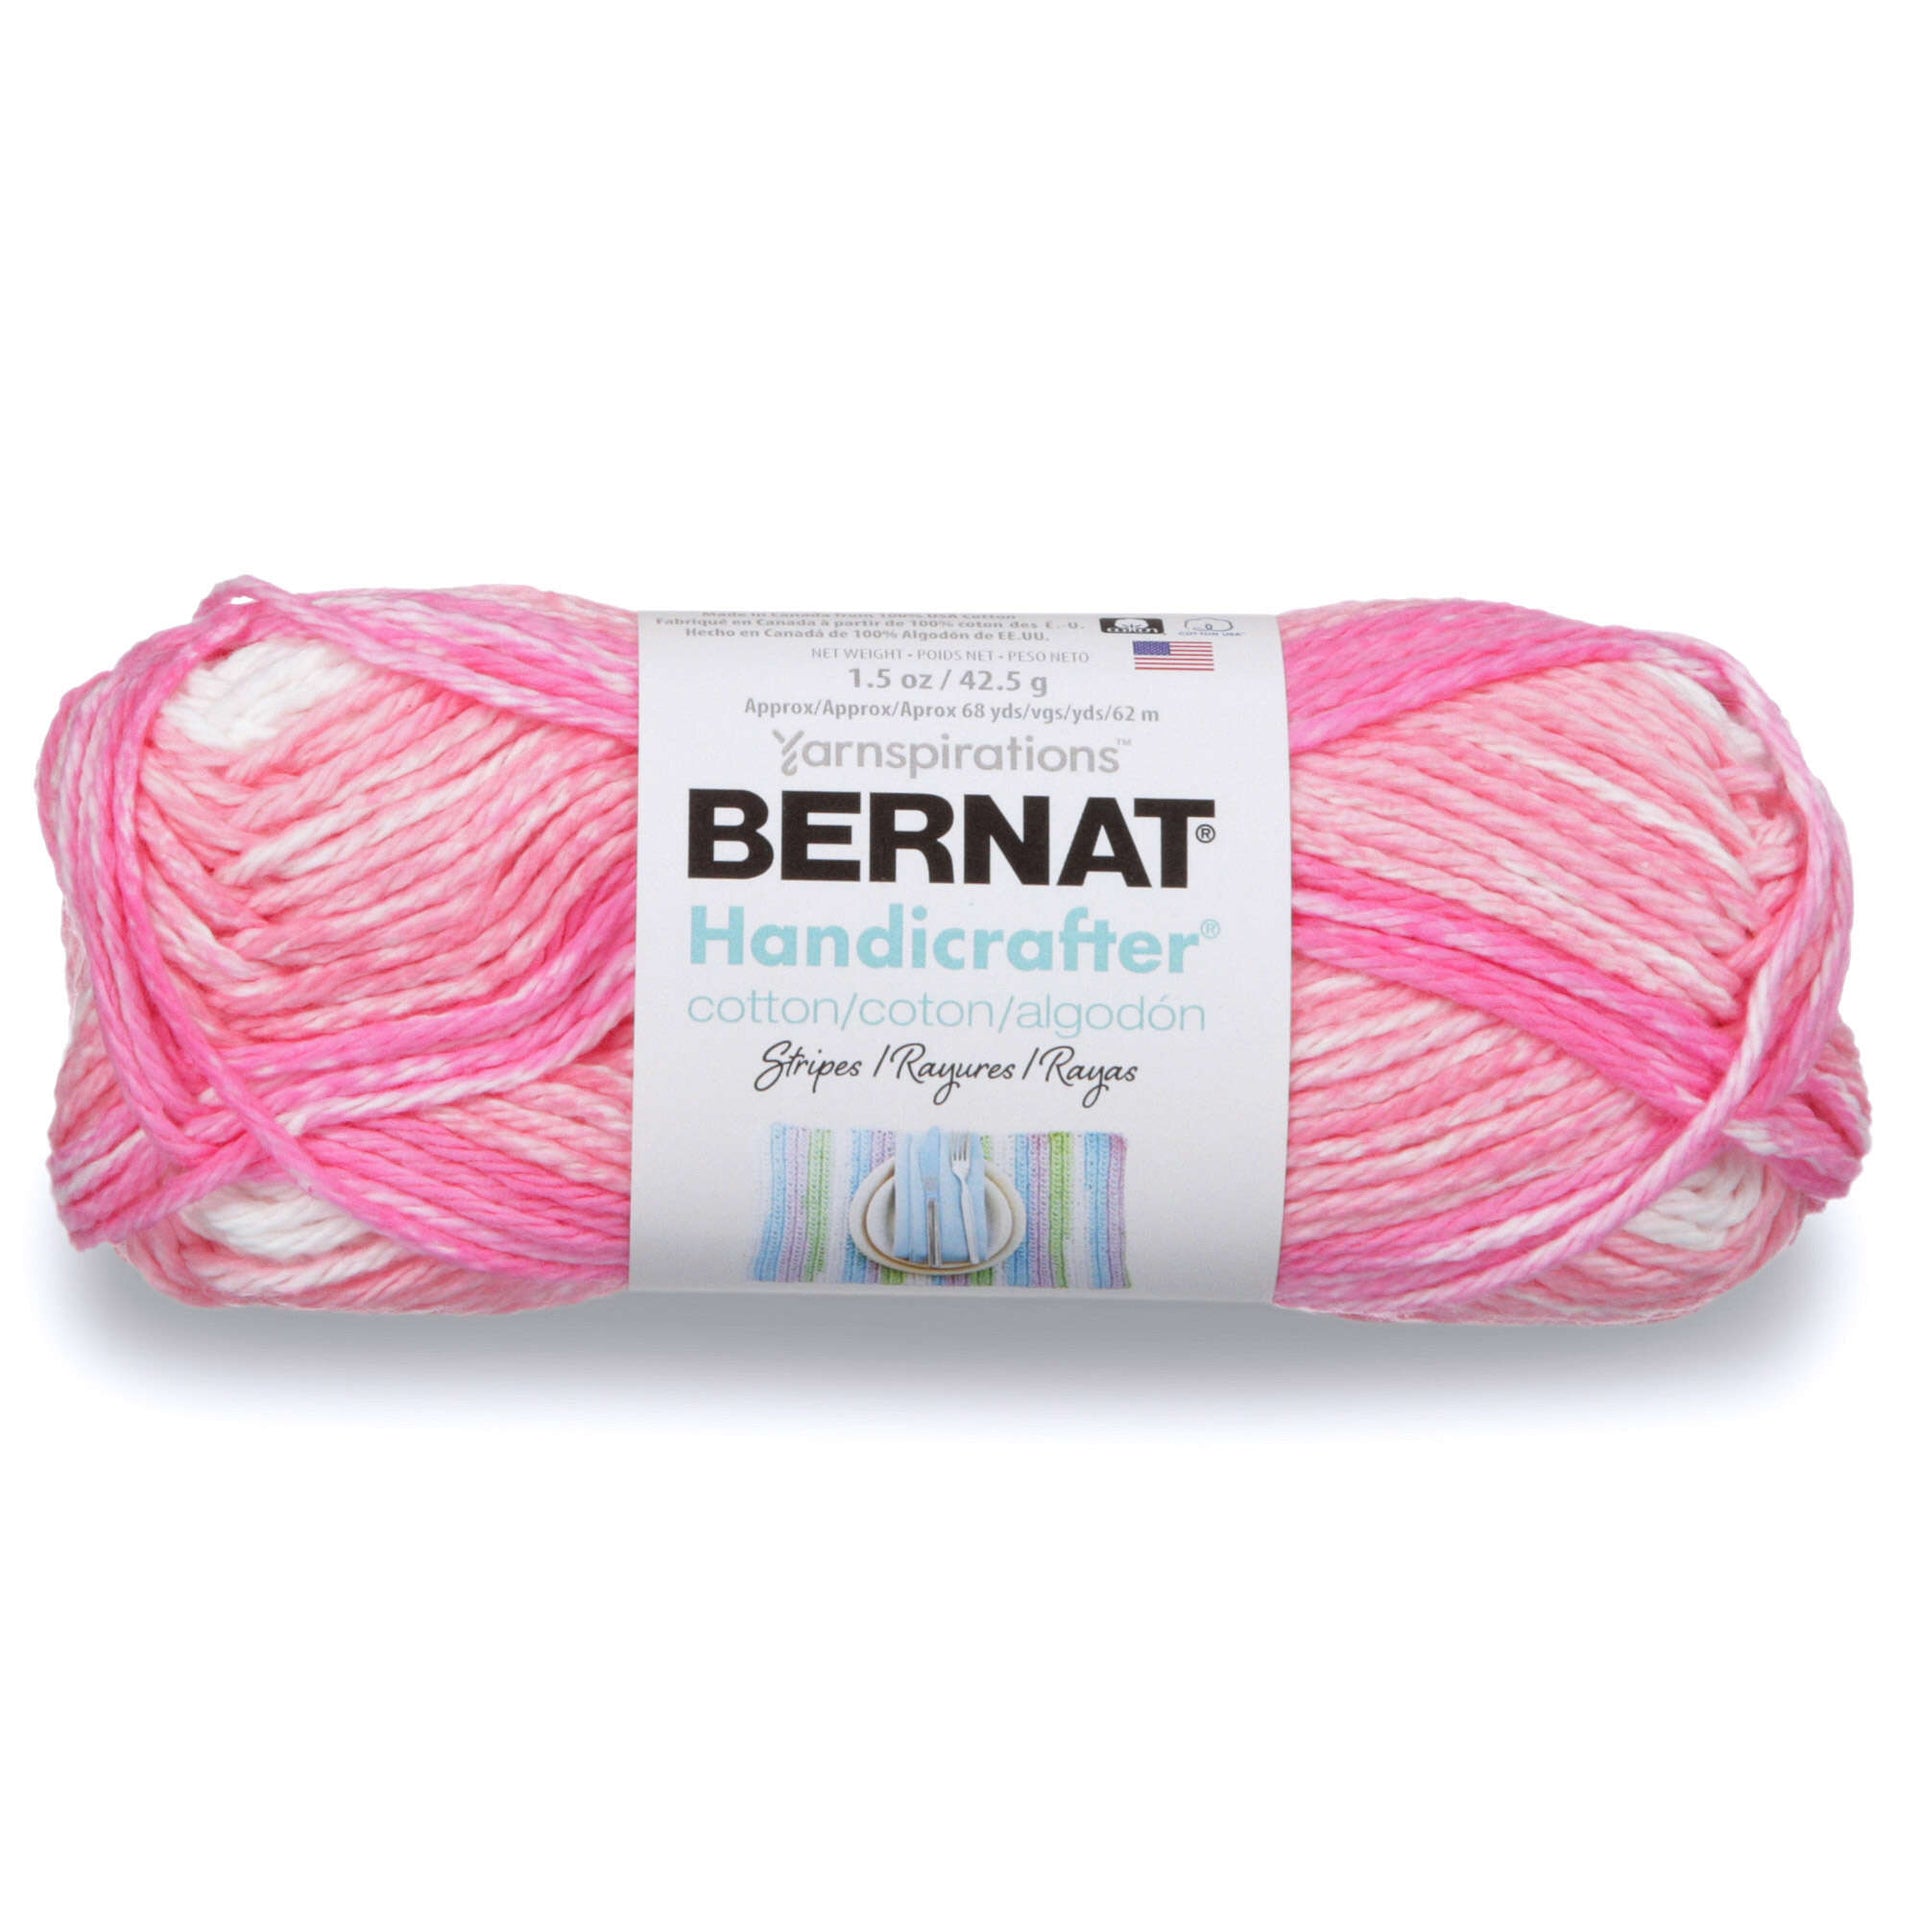 Bernat Handicrafter Cotton Stripes Country Stripes Yarn - 6 Pack